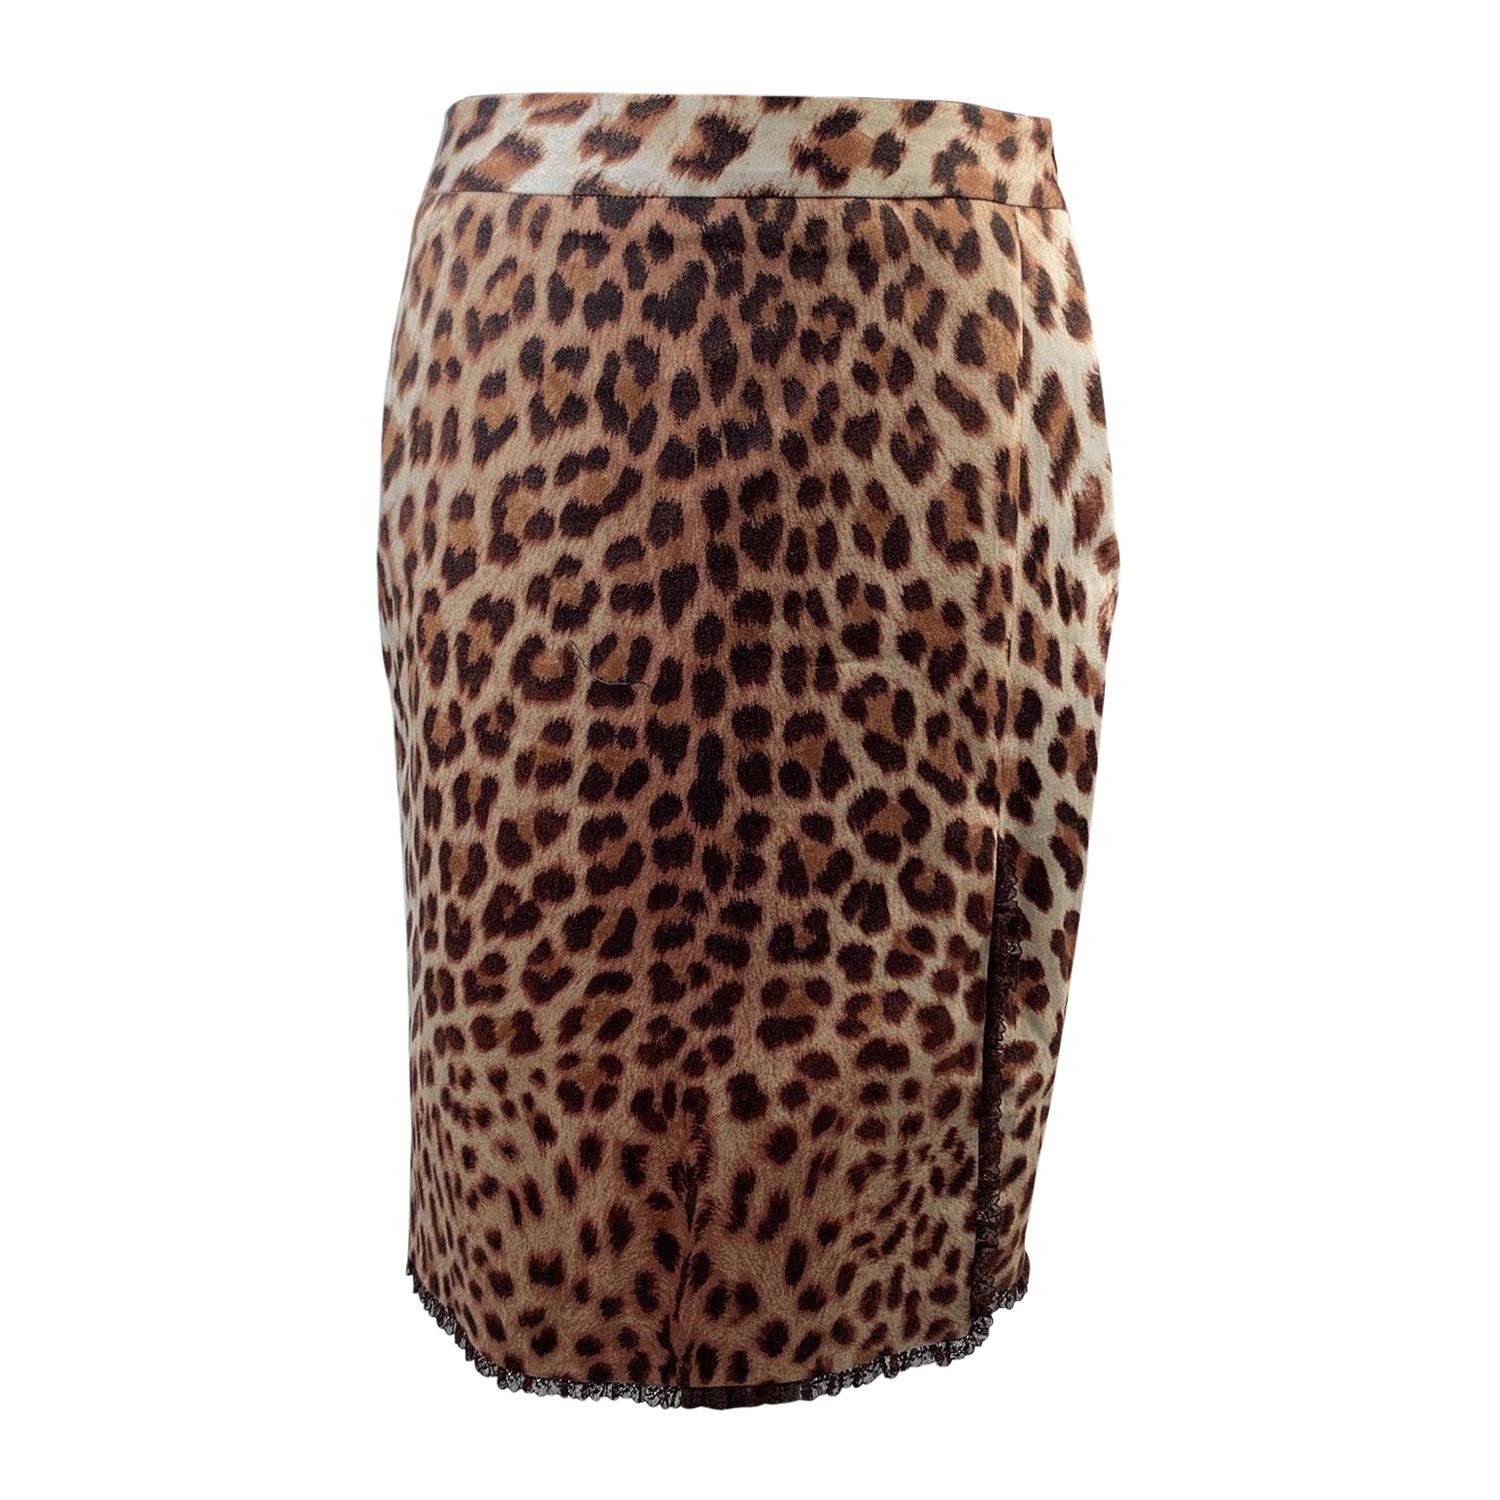 Blumarine Animalier Leopard Print Pencil Skirt Size 42